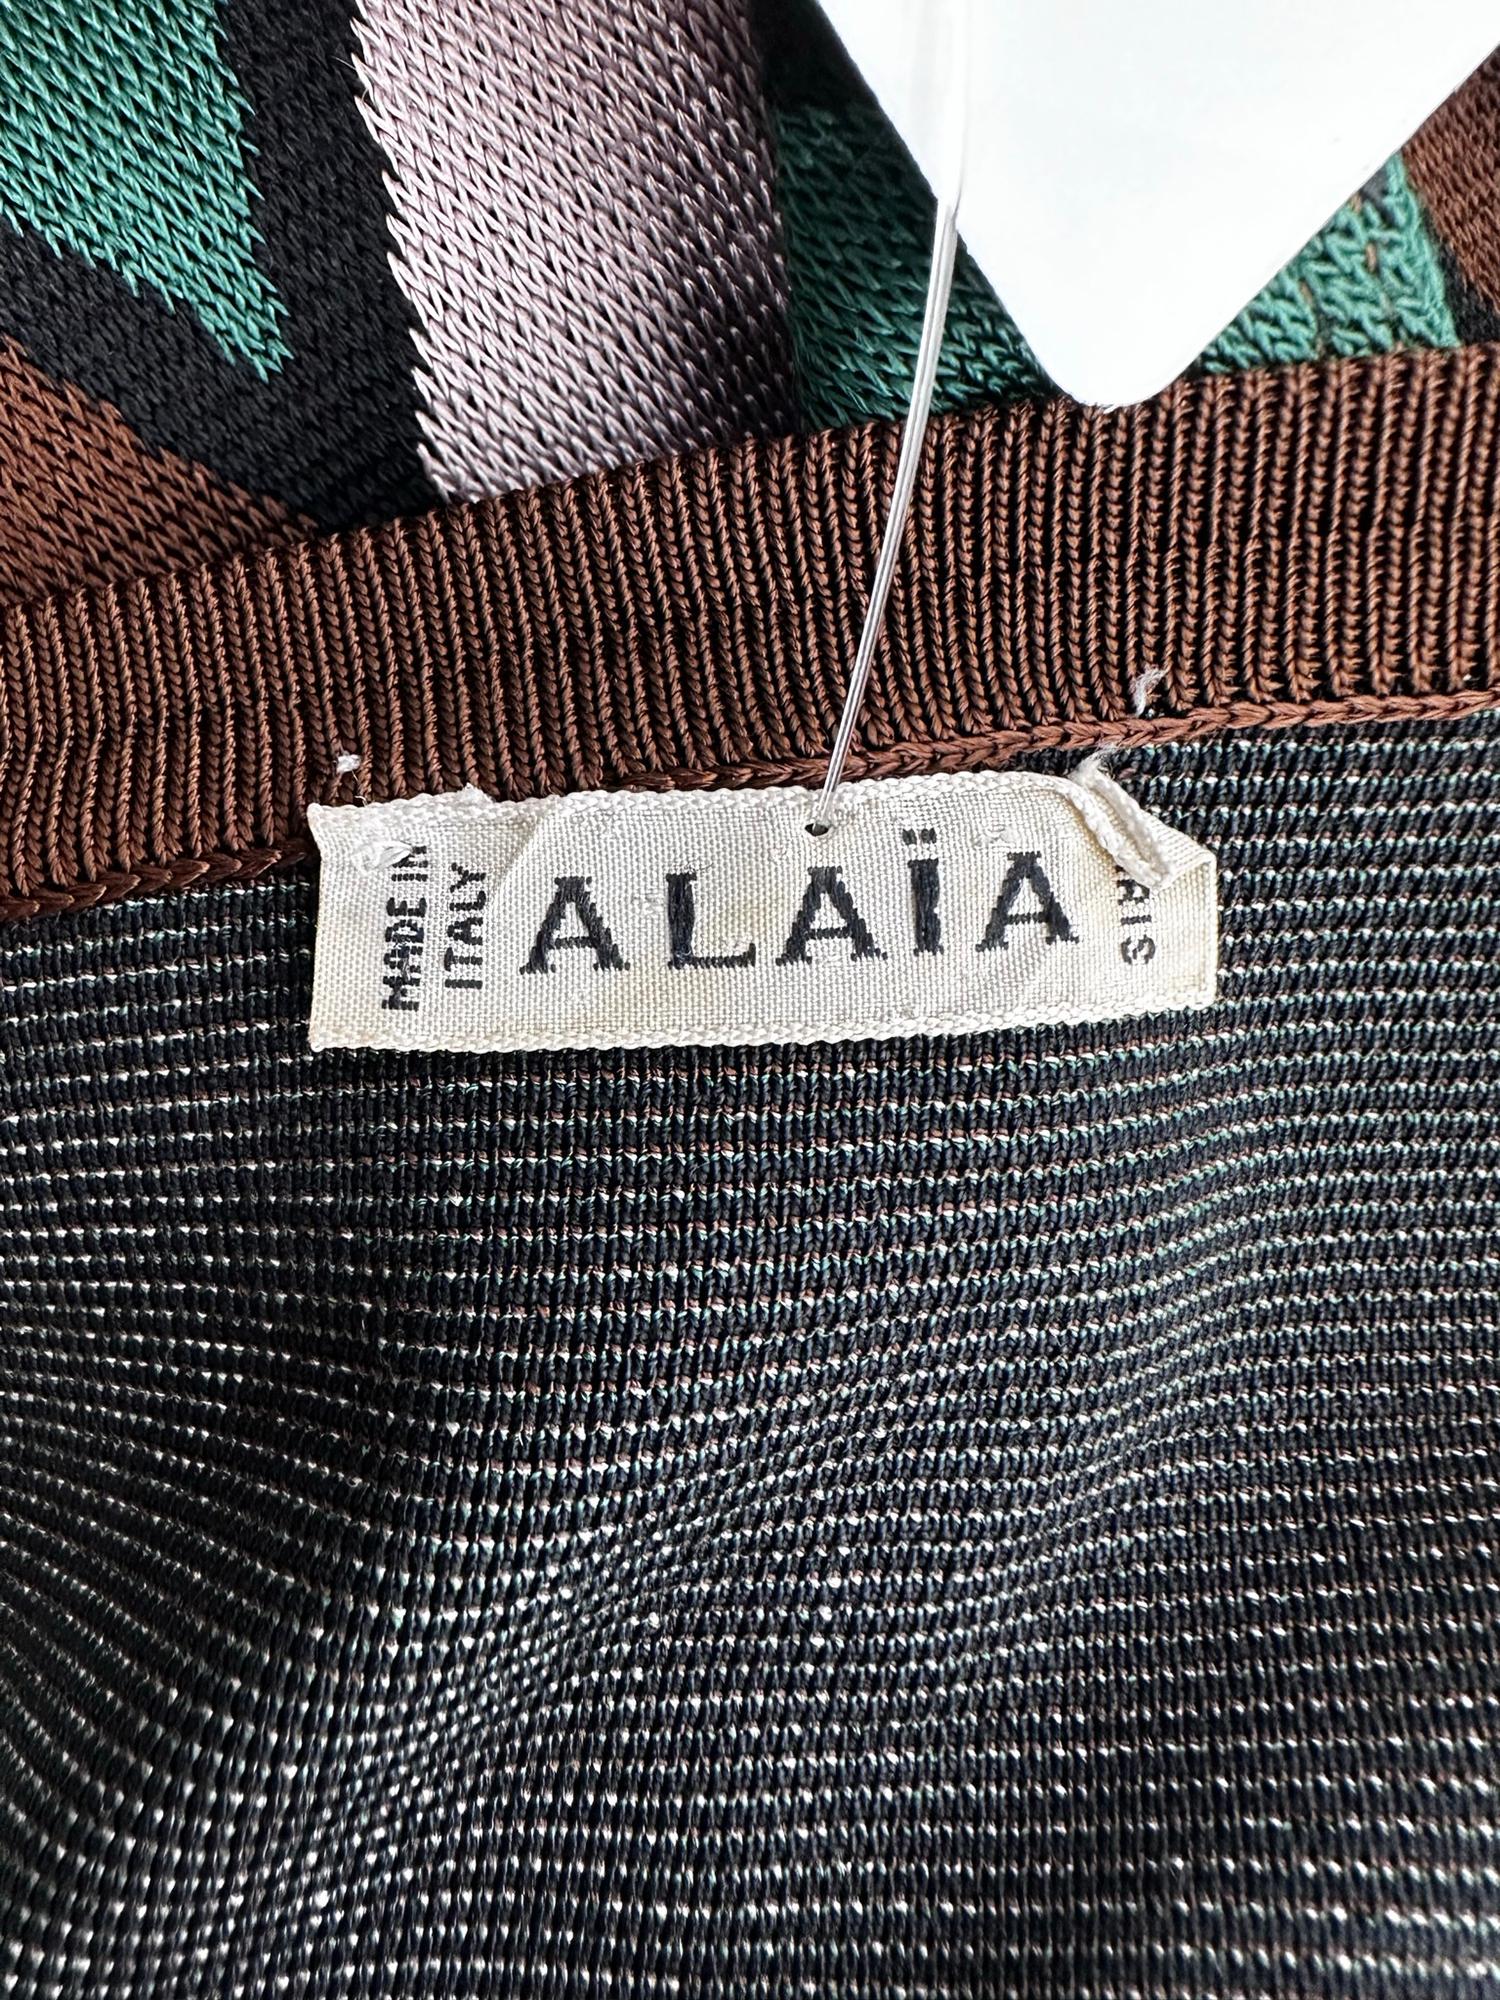 Azzedine Alaia Rare Fall 1992 Brown & Green Argyle Knit Body Con Dress Medium For Sale 8